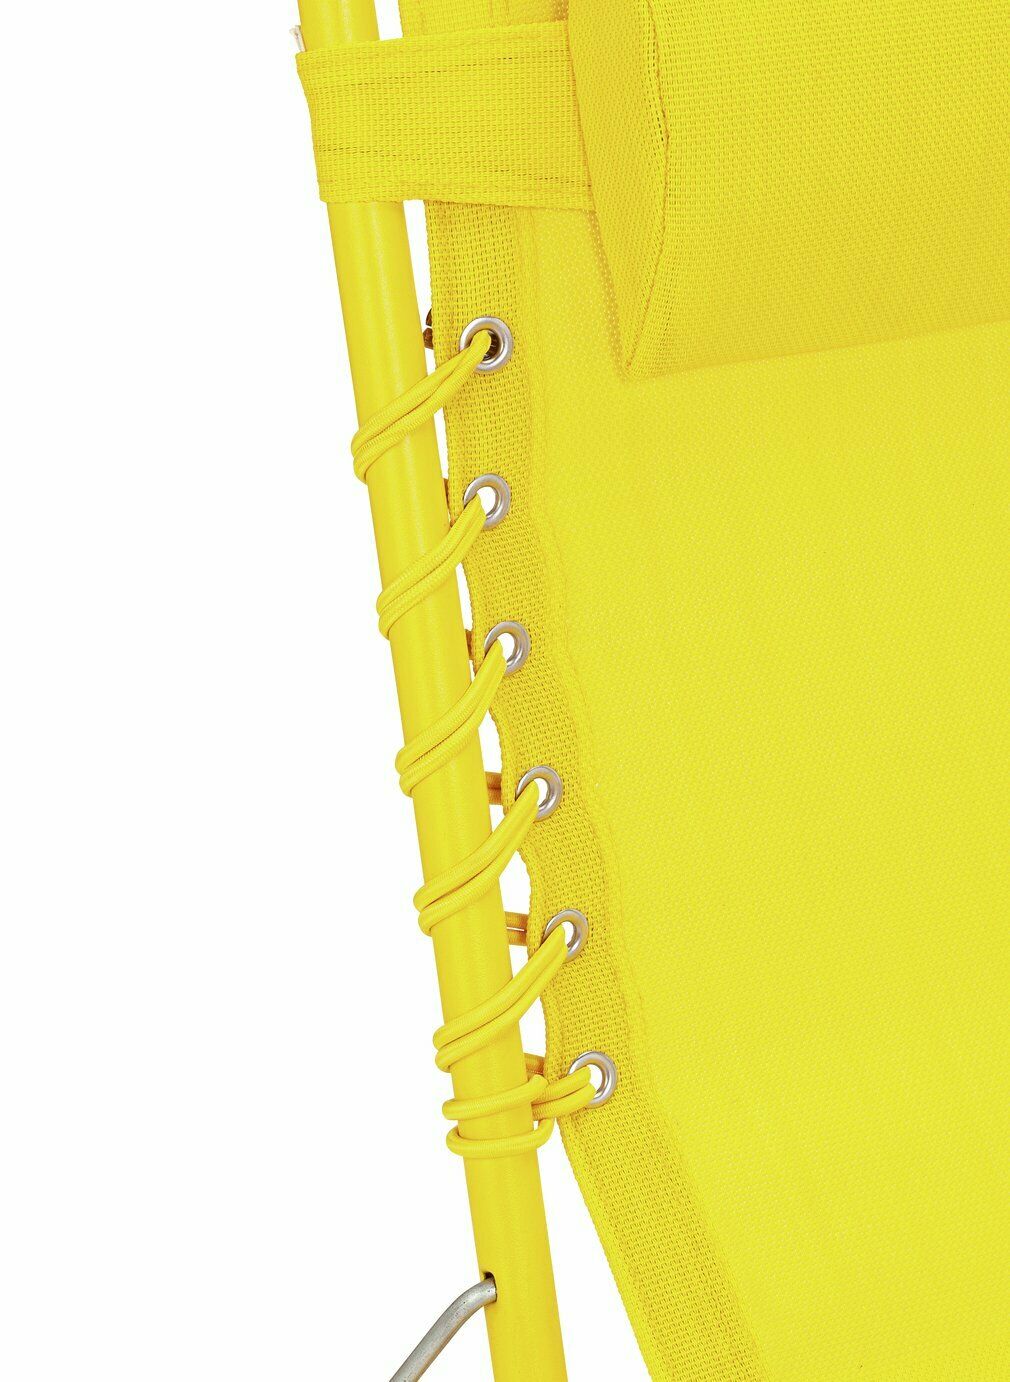 Home Set of 2 Folding Metal Sun Loungers - Yellow